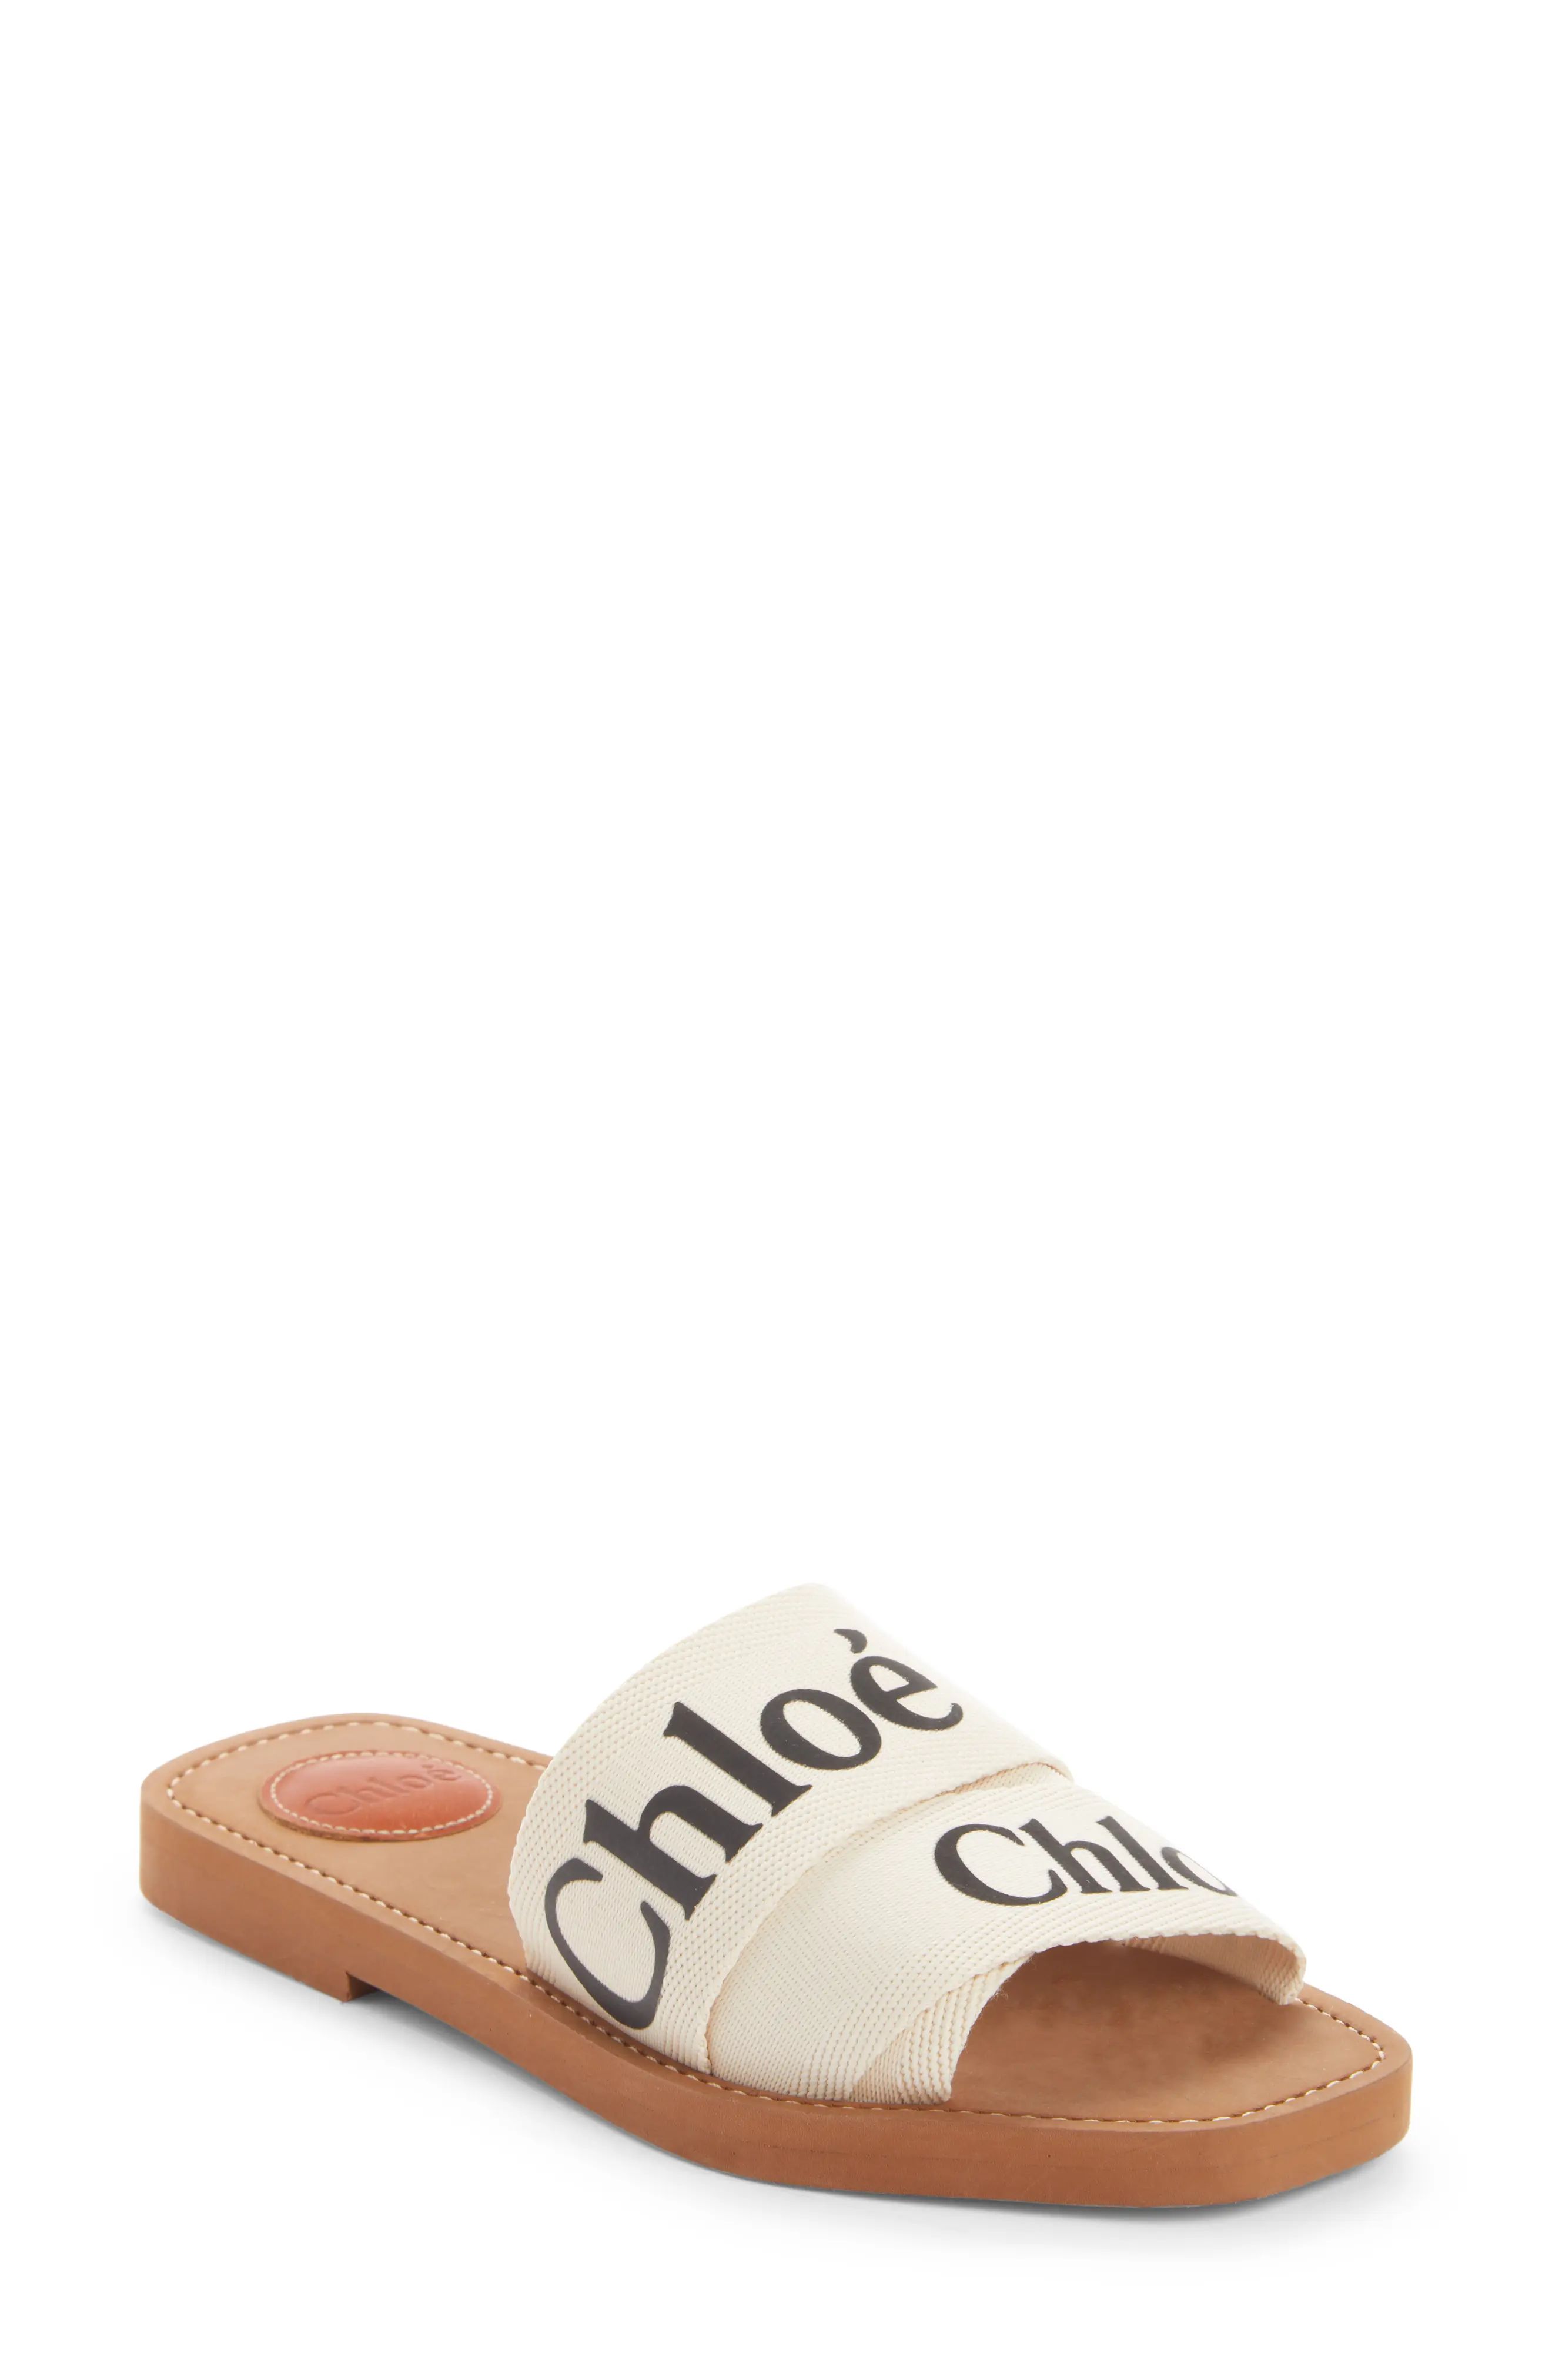 Chloe Logo Slide Sandal in White at Nordstrom, Size 10Us | Nordstrom